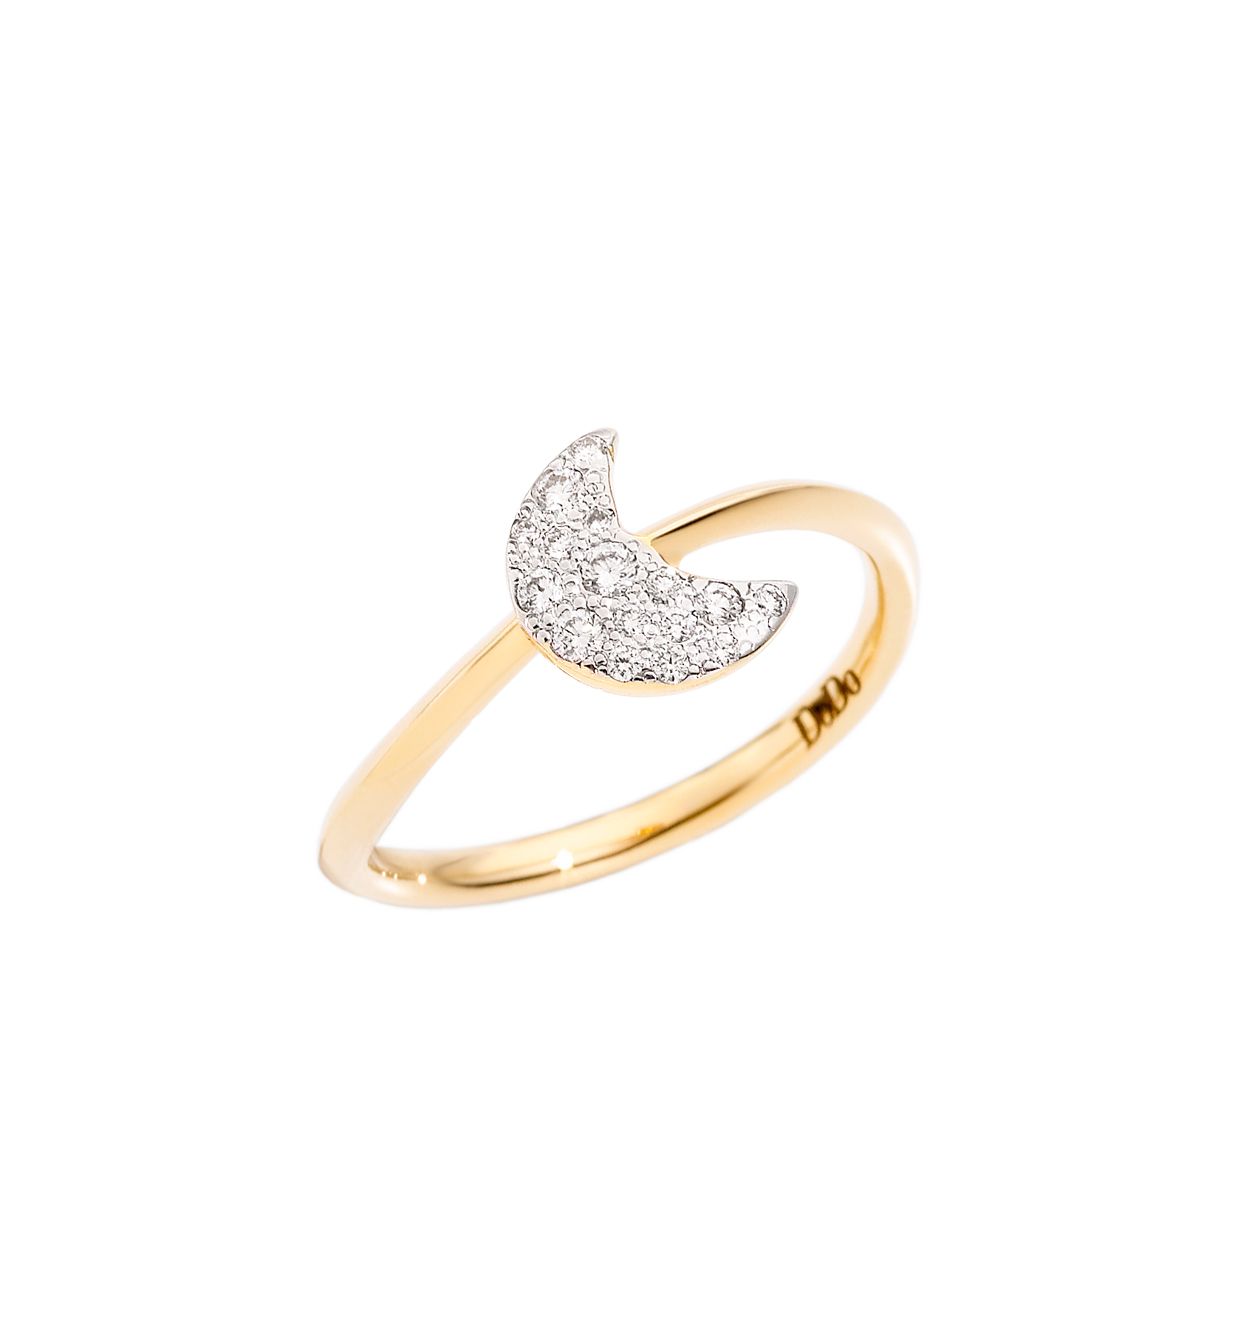 NEW ABS Allen Schwartz Gold Tone Crescent Moon Crystals Adjustable Ring  Size 6 | eBay